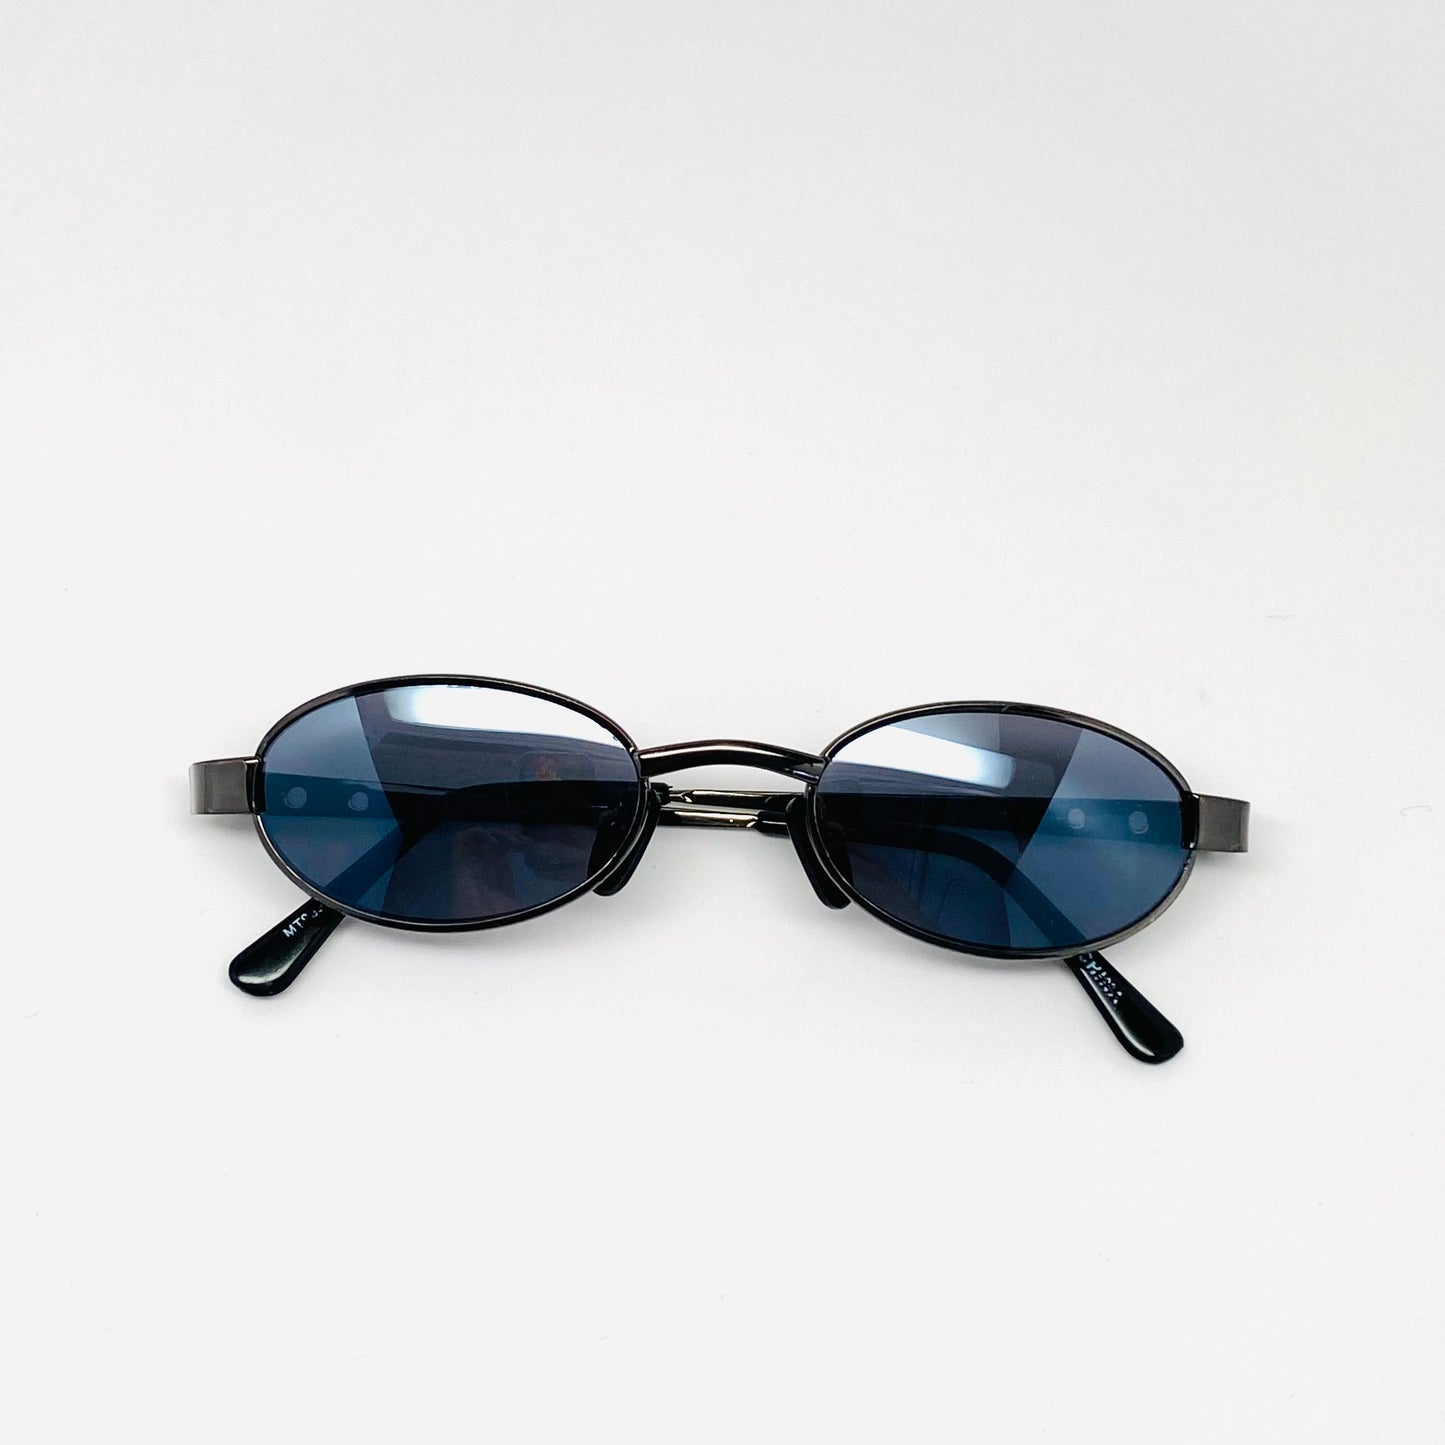 Vintage Small Size 1998 Narrow Oval Sunglasses - Grey